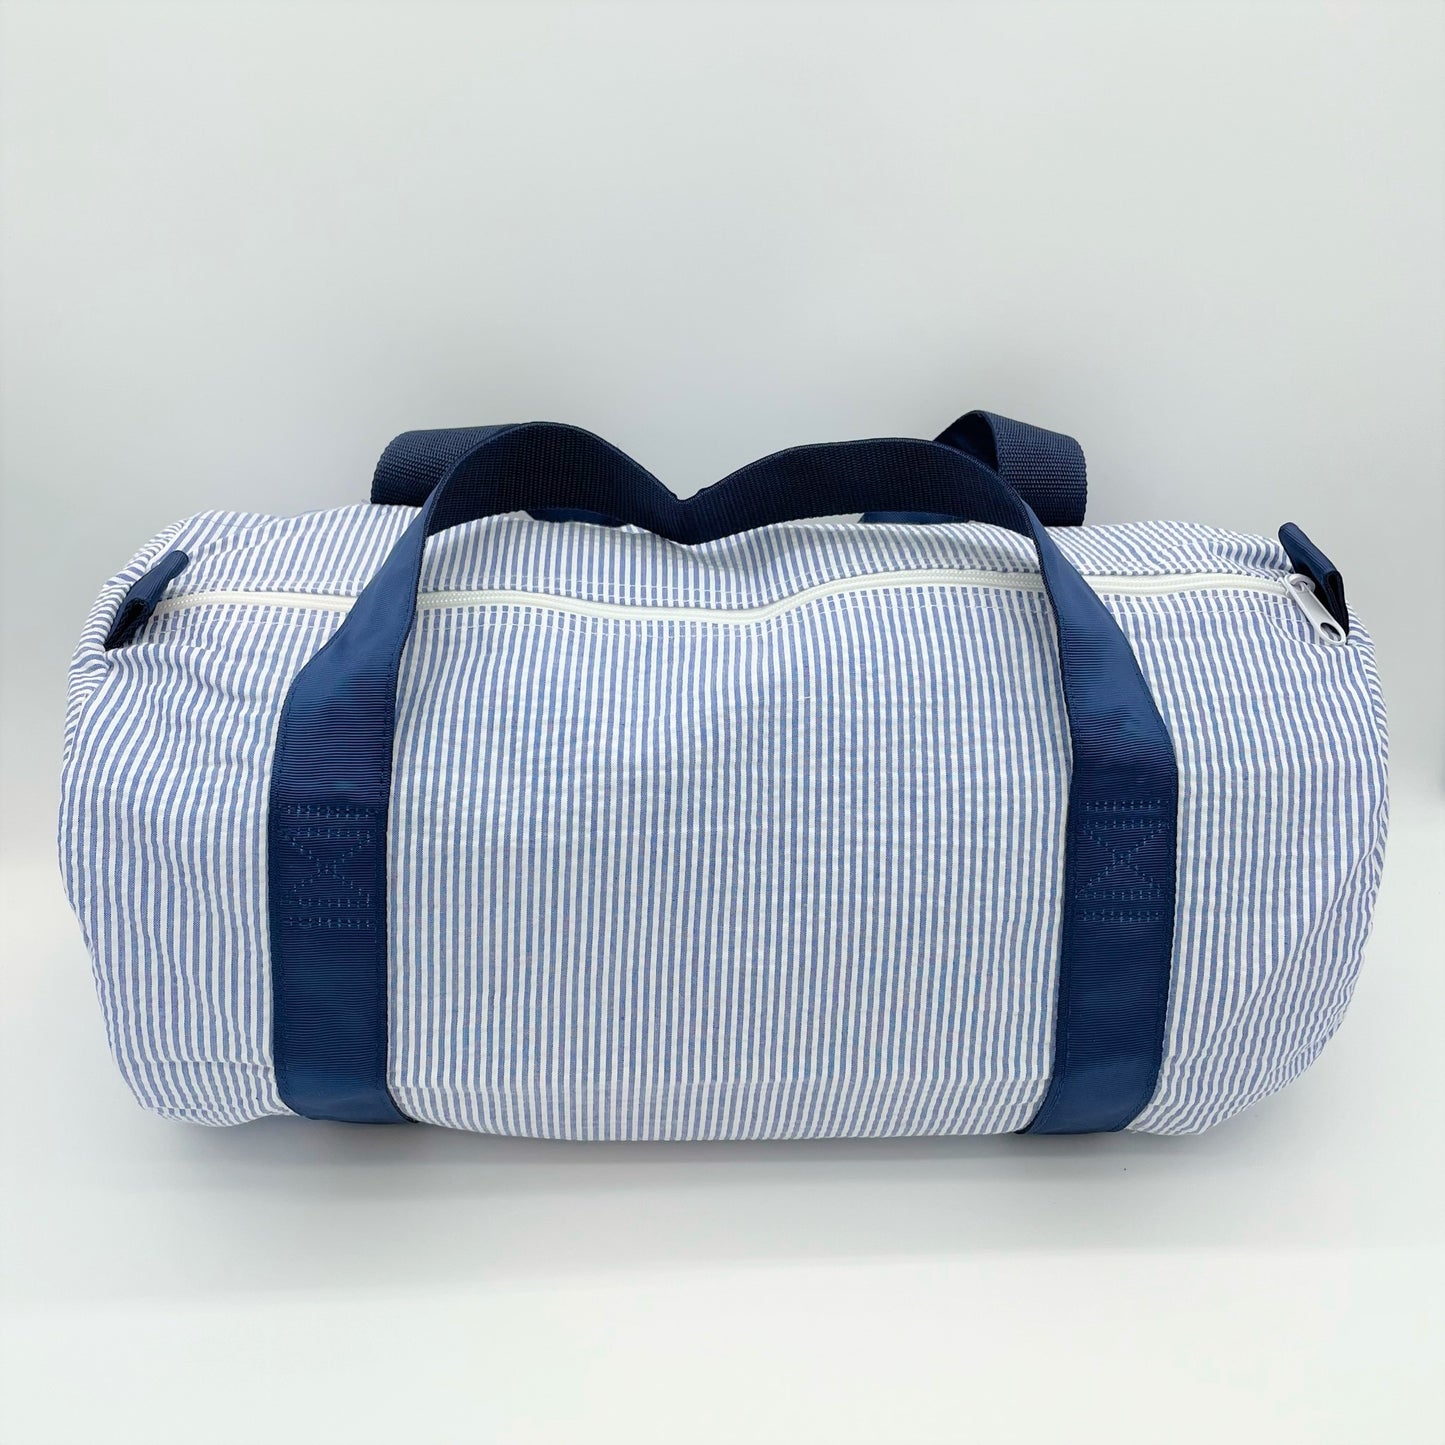 Medium Duffel Bags – Something Personalized